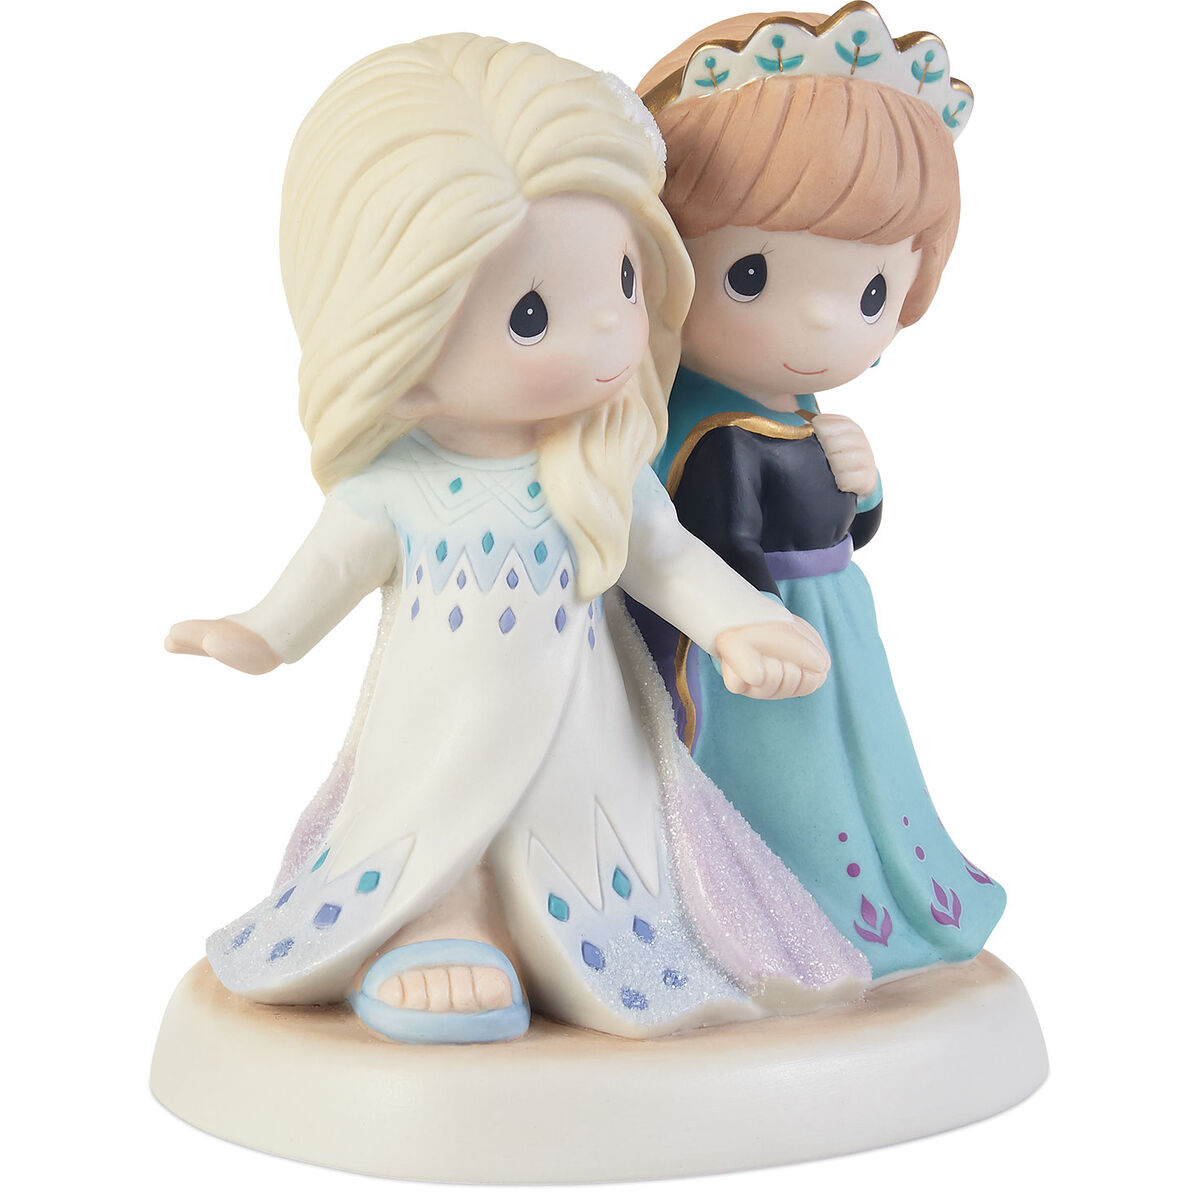 Precious Moments Disney Elsa and Anna Figurine, 5.25" Figurines